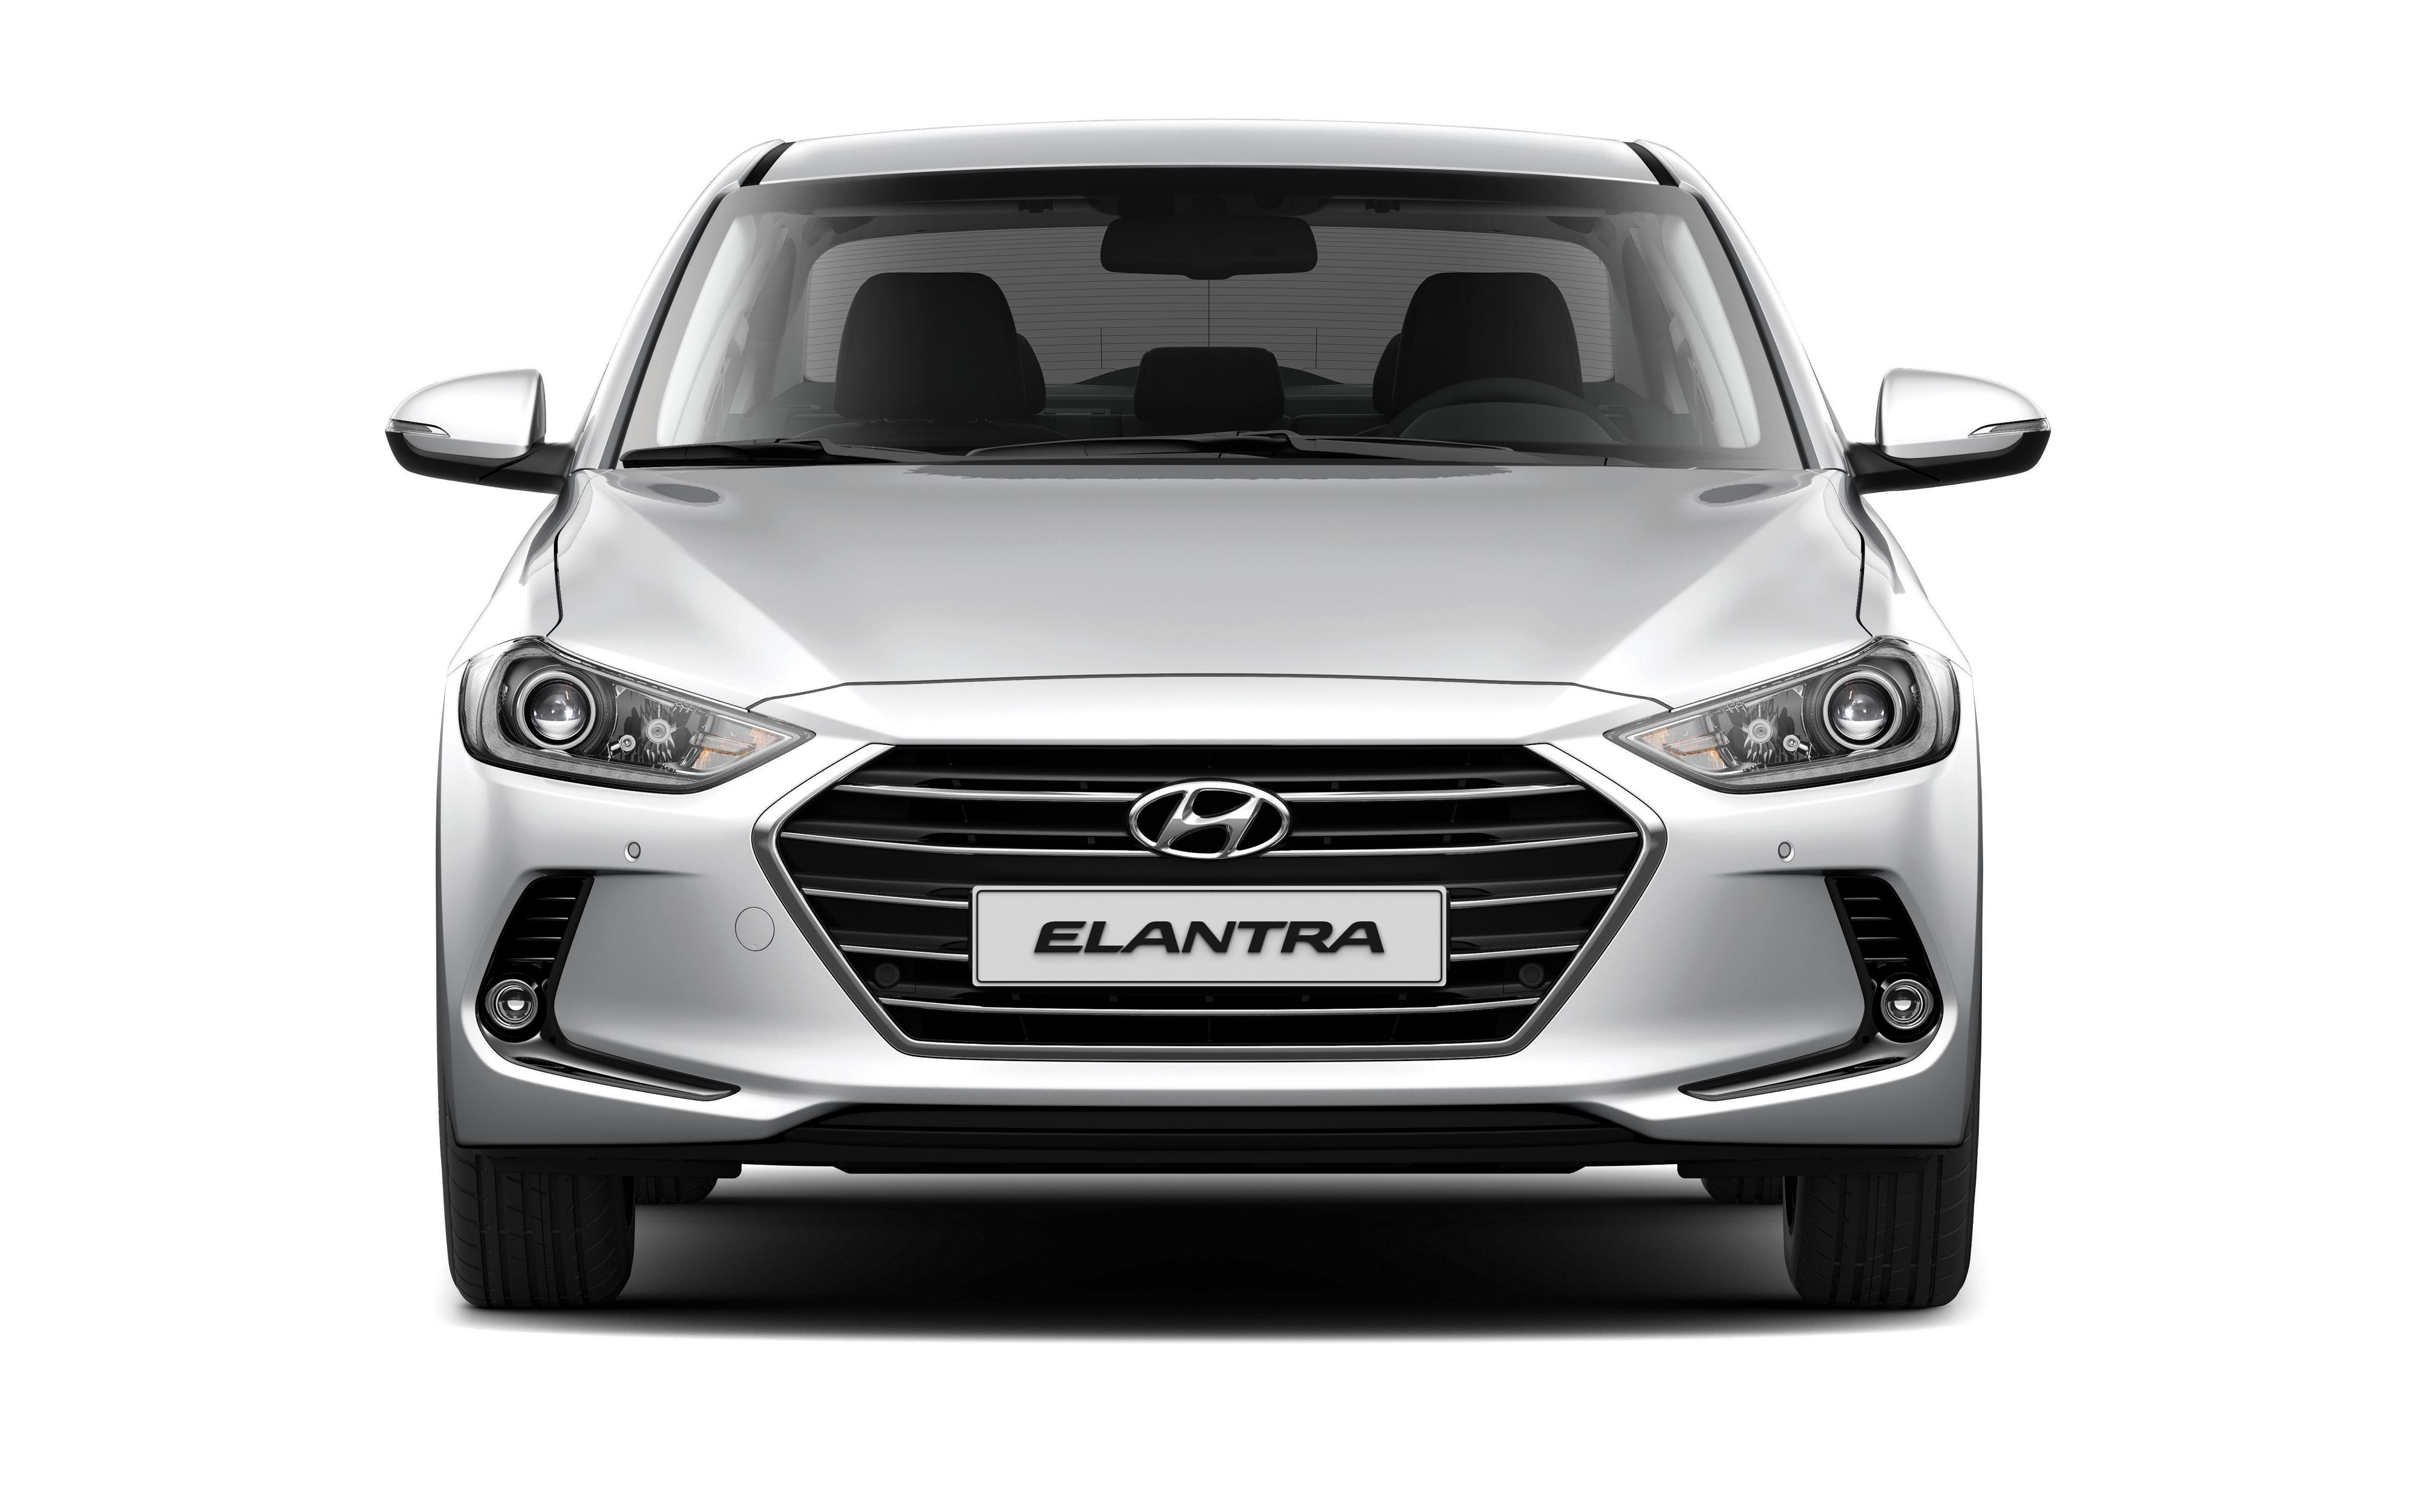  Hyundai Elantra (2016-2018)